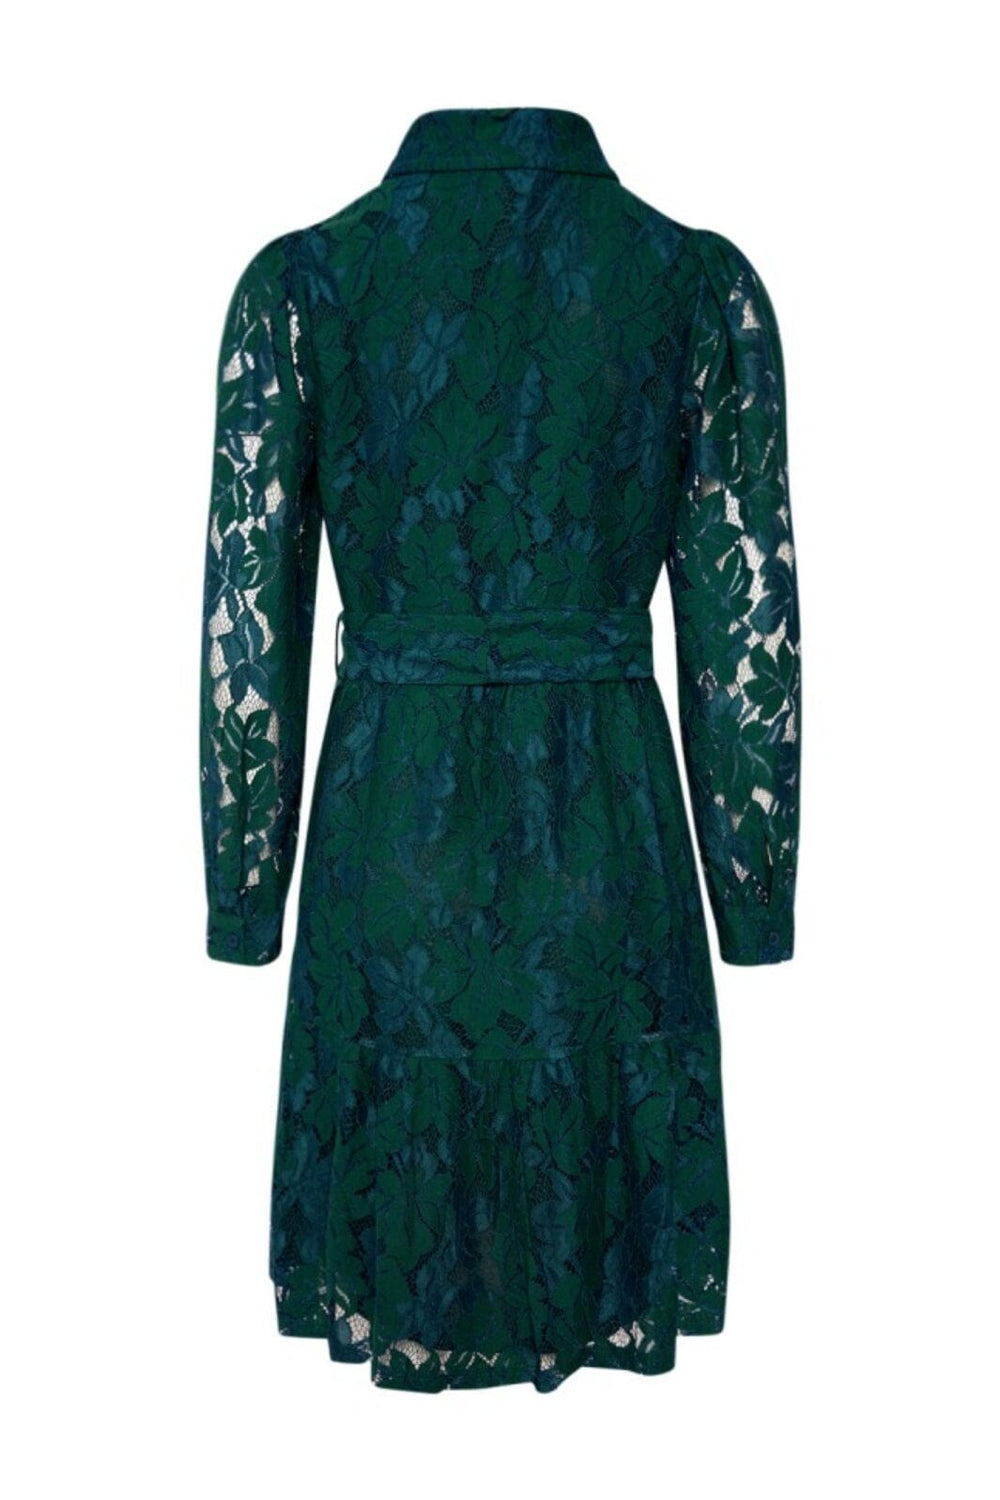 Noella - Pixi Shirt Dress Lace - Bottle Green Kjoler 